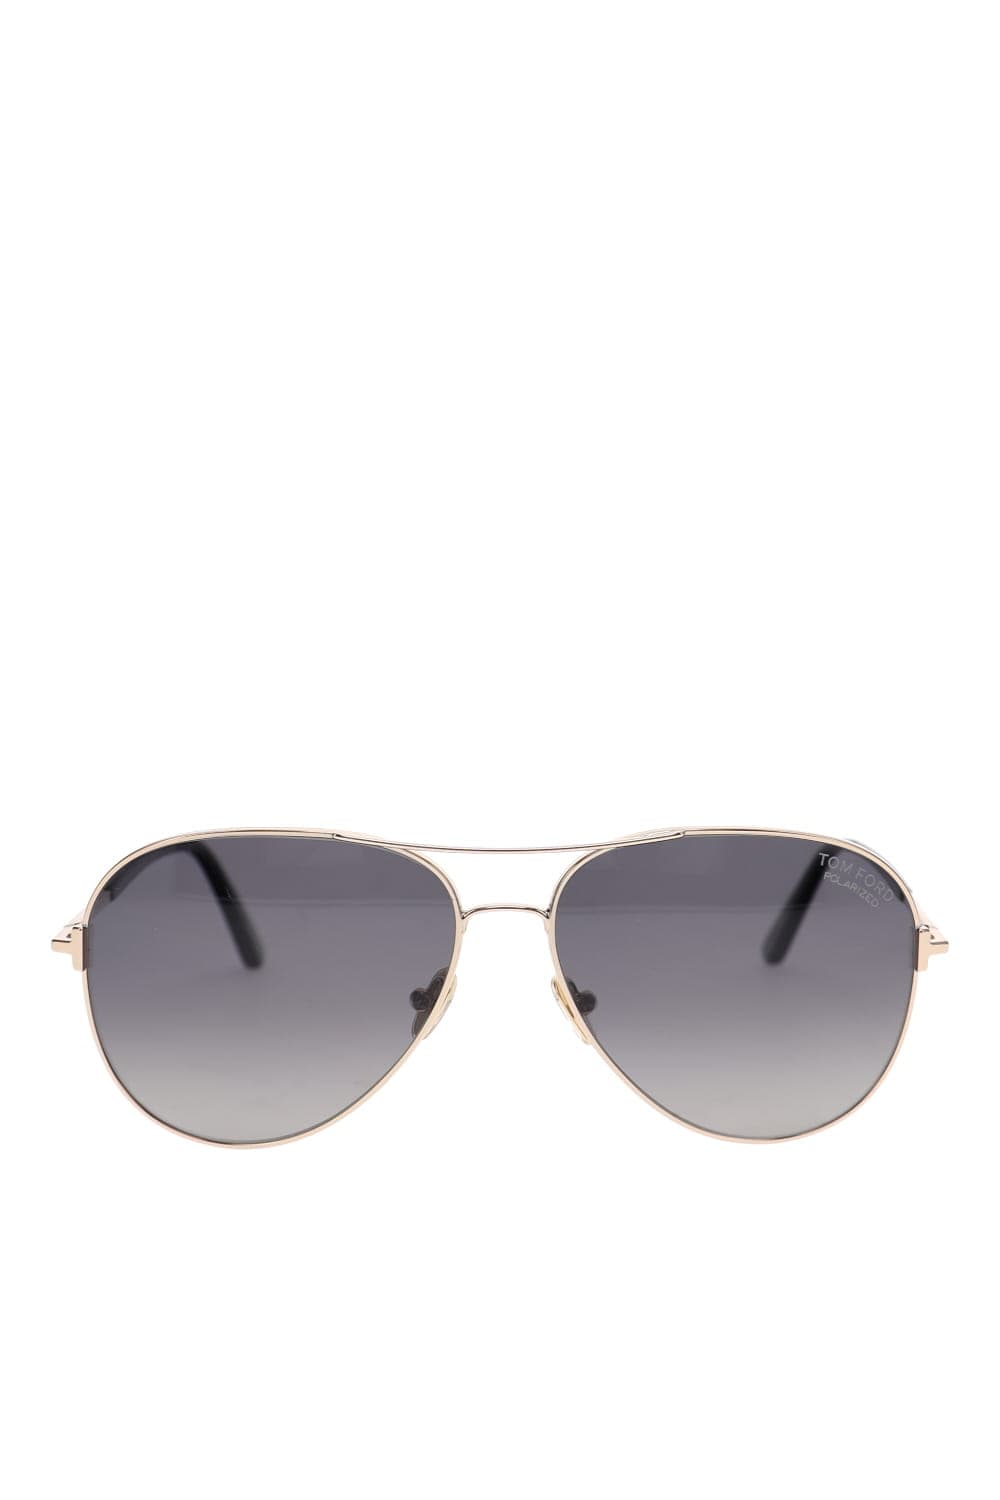 Tom Ford Eyewear Clark Polarized Black Smoke Aviator Sunglasses